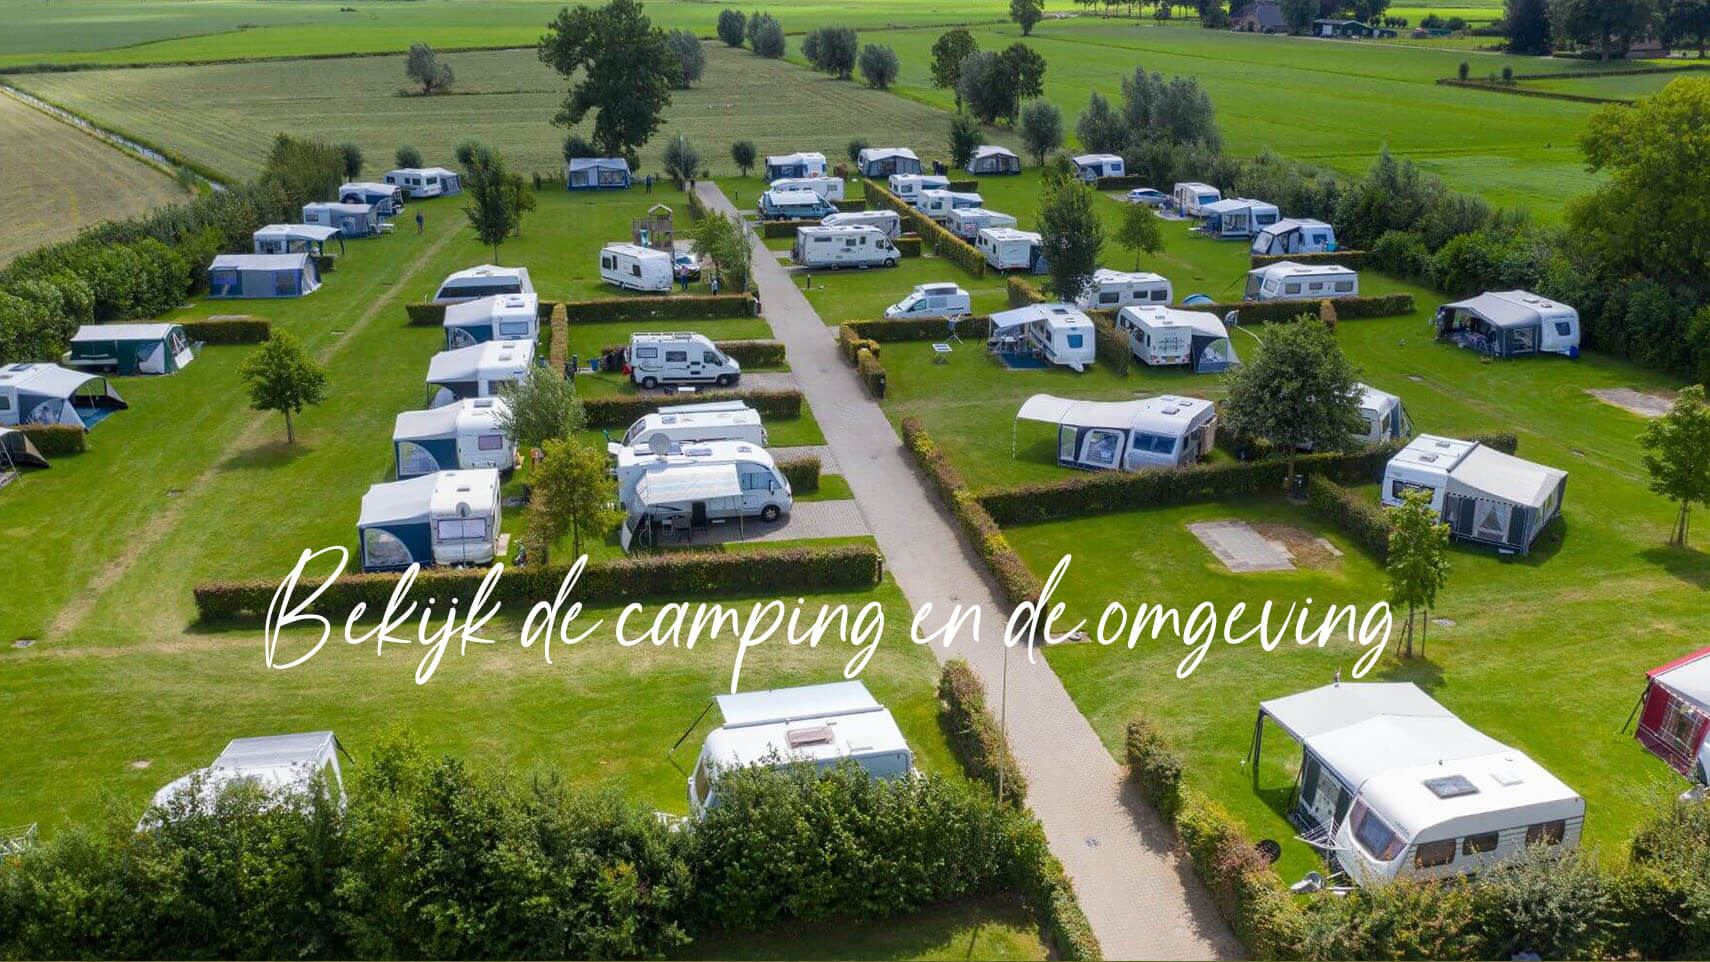 Camping in Overijssel (1)